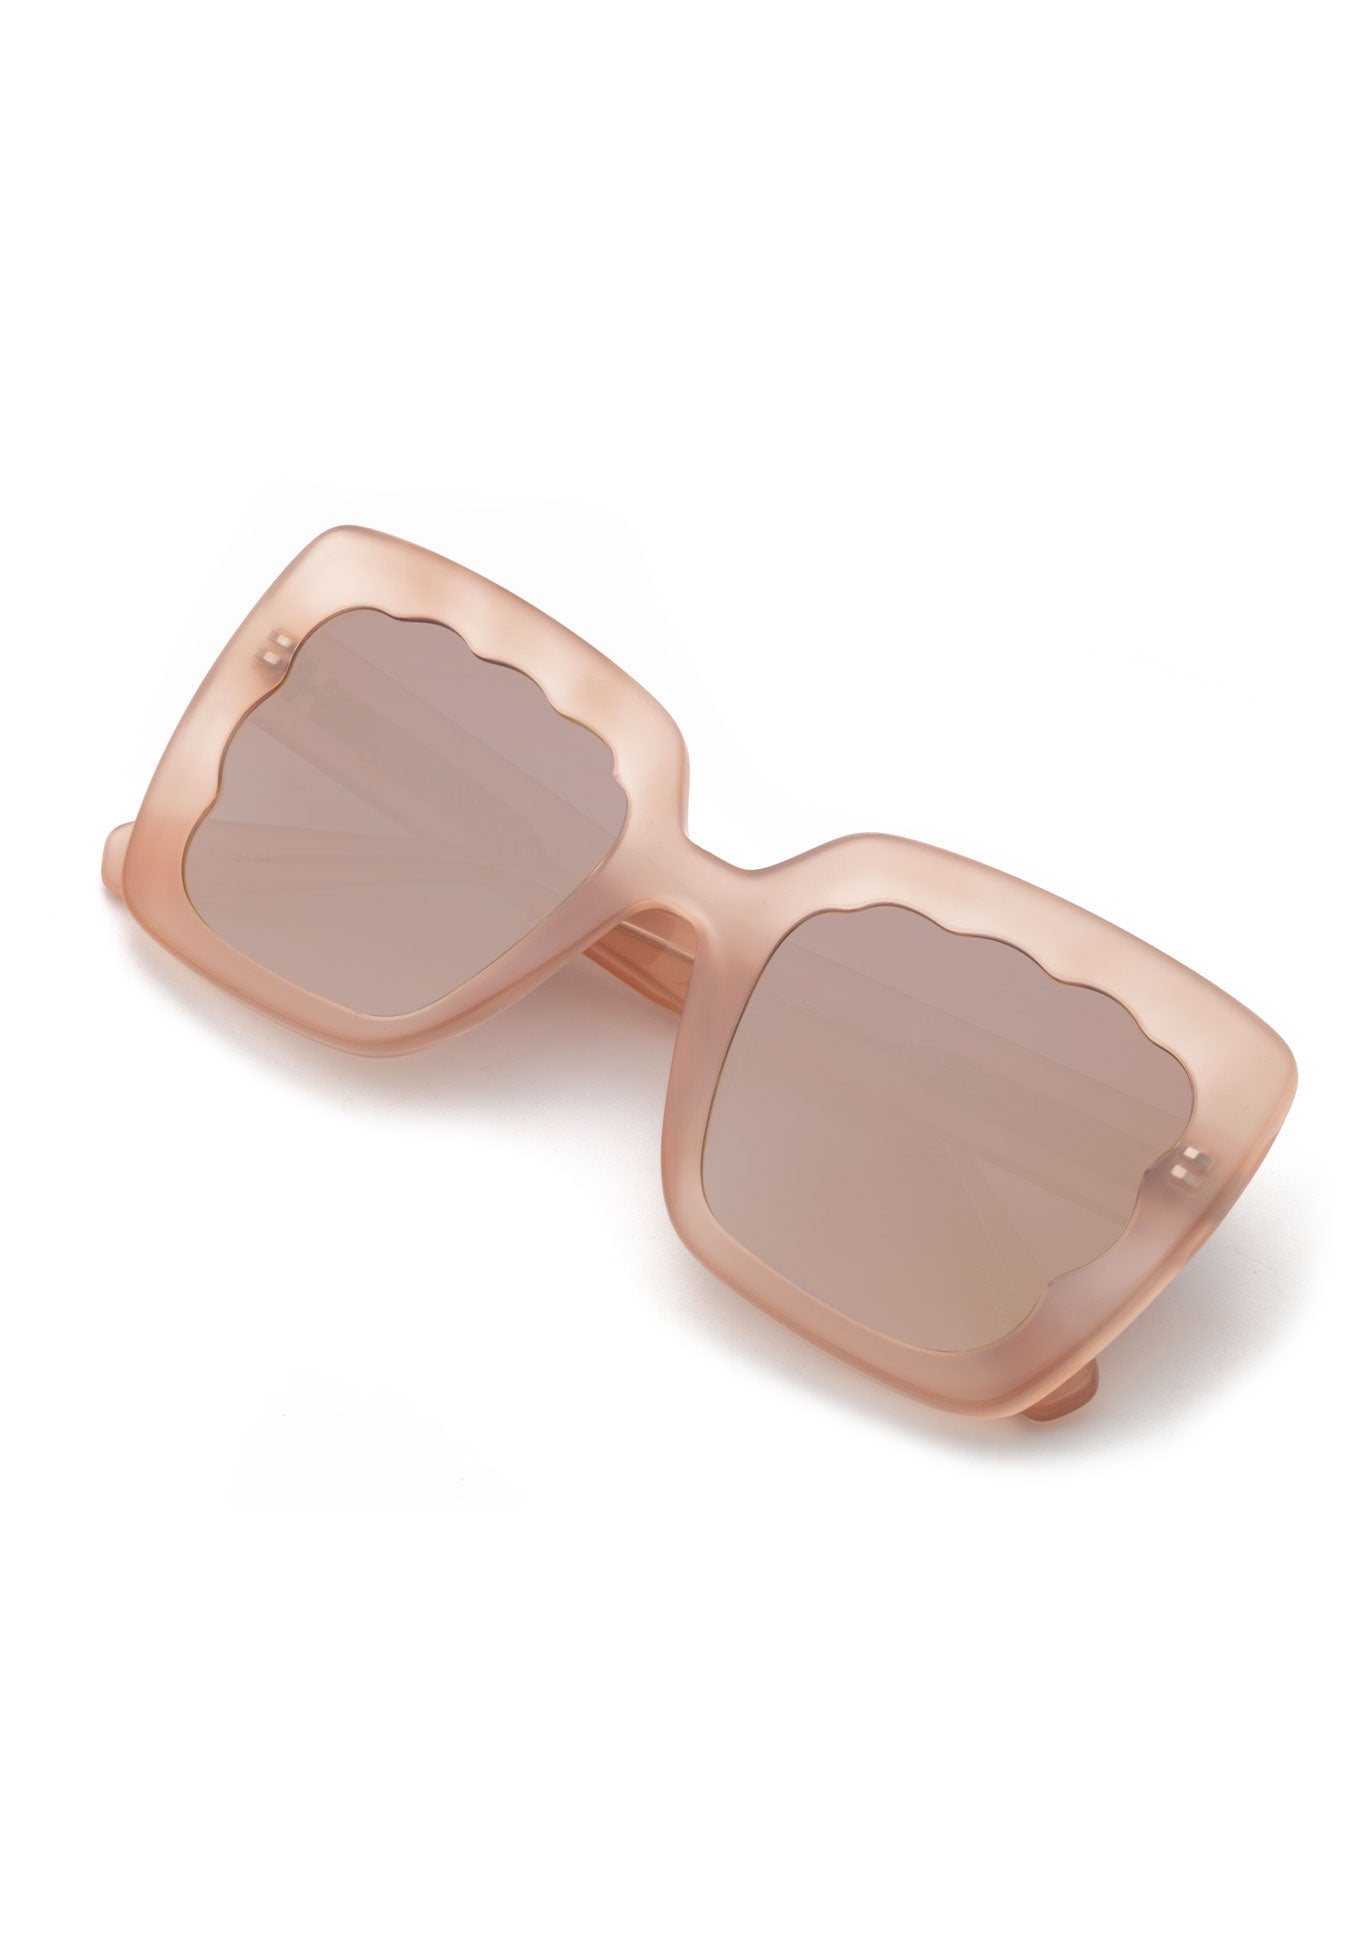 KREWE SUNGLASSES - ELIZABETH | Blush Mirrored handcrafted, luxury pink acetate scalloped sunglasses